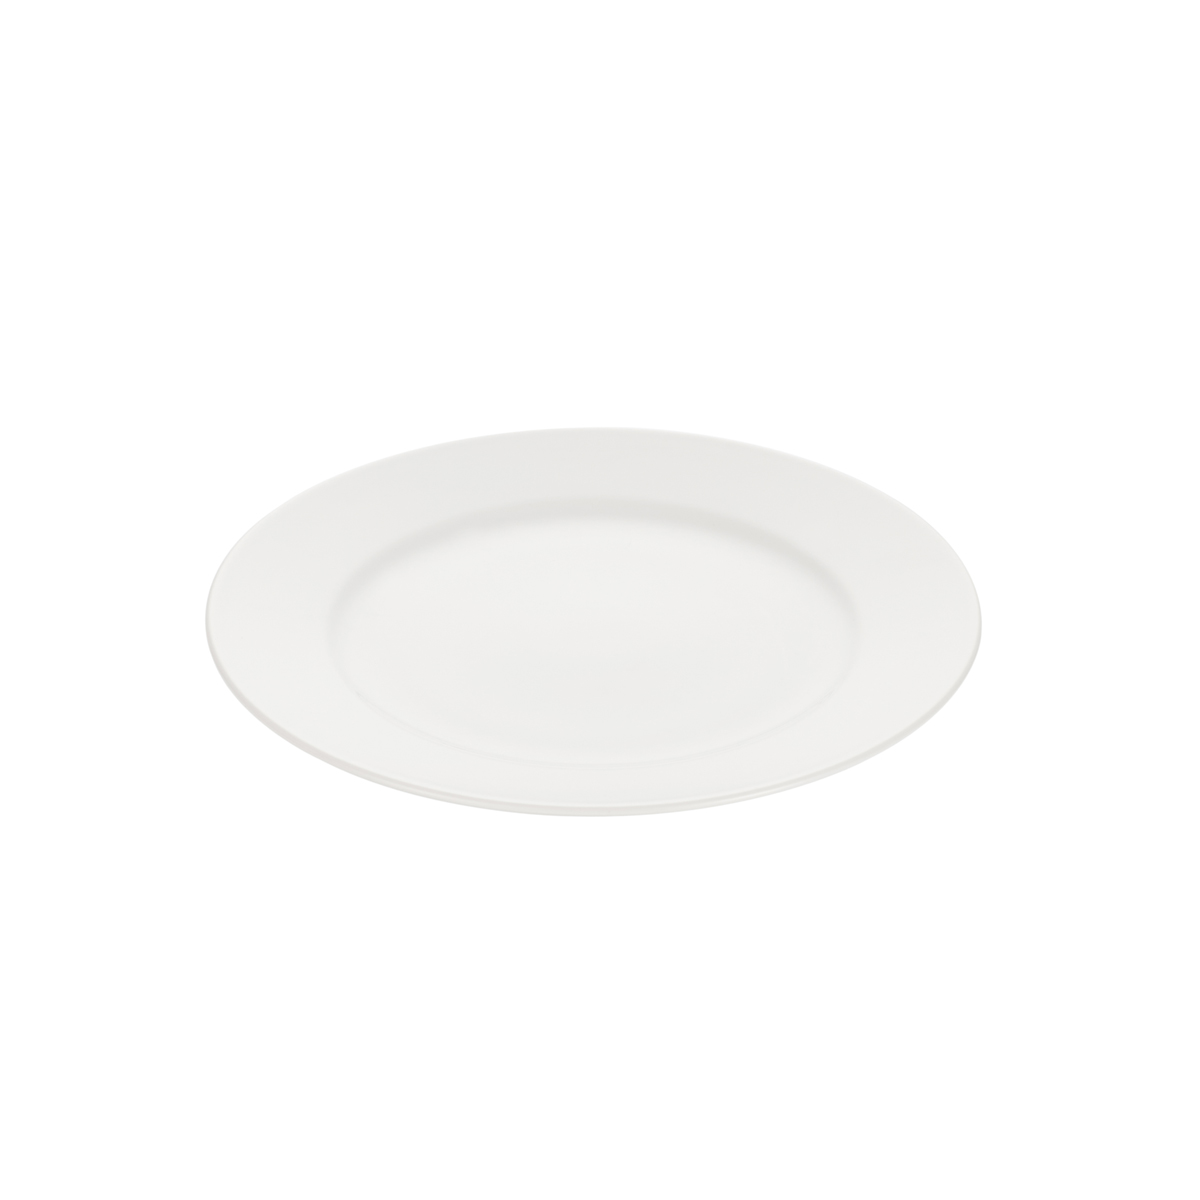 Плоская тарелка Gipfel Classique 50905 25 см плоская тарелка gipfel classique 50907 30 см